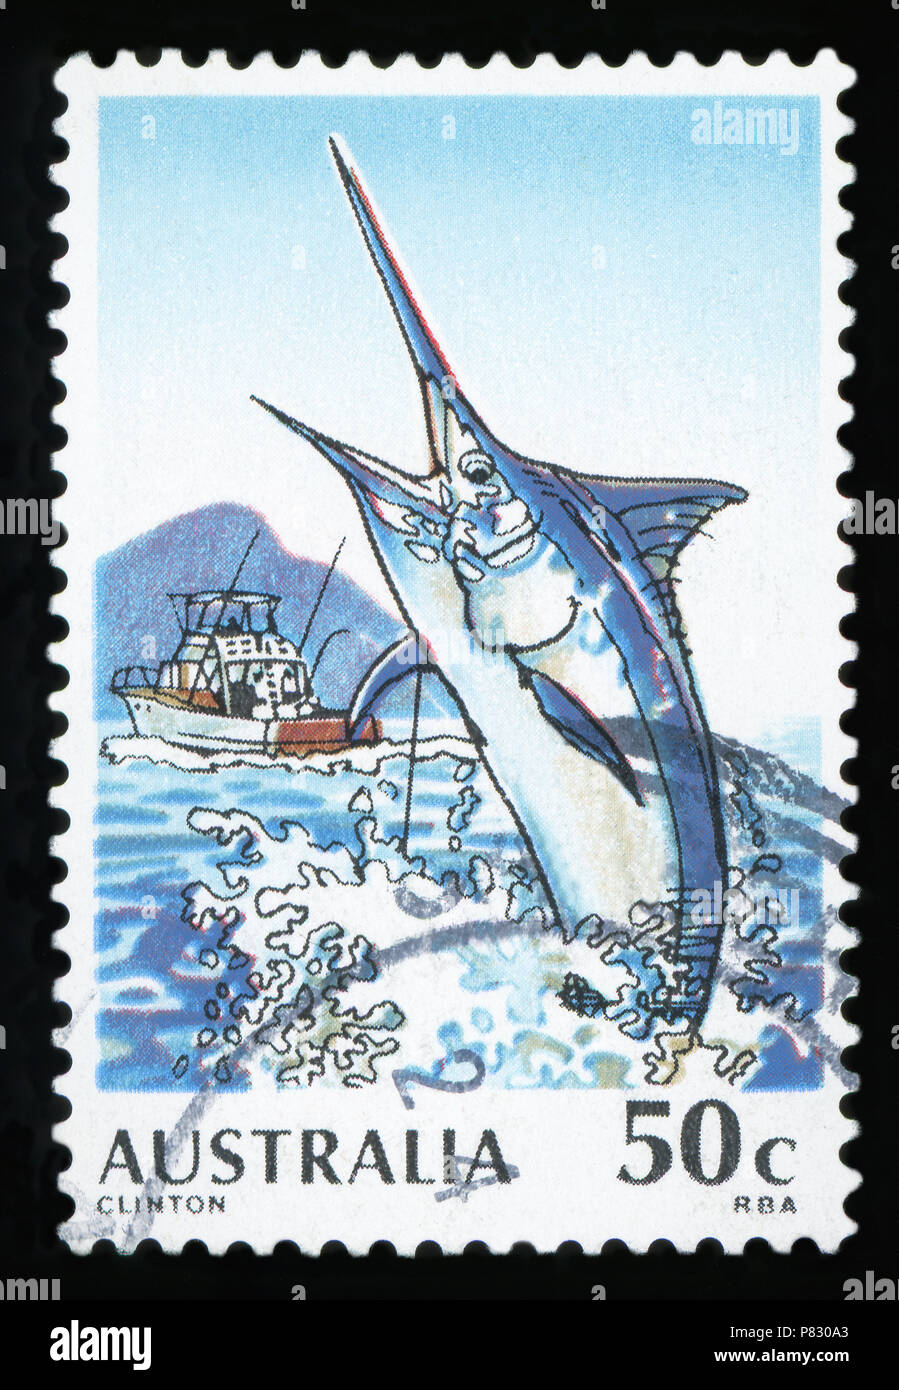 AUSTRALIA - CIRCA 1992: post stamp printed in Australia shows black marlin (Clinton) jumping from the sea; circa 1992 Stock Photo